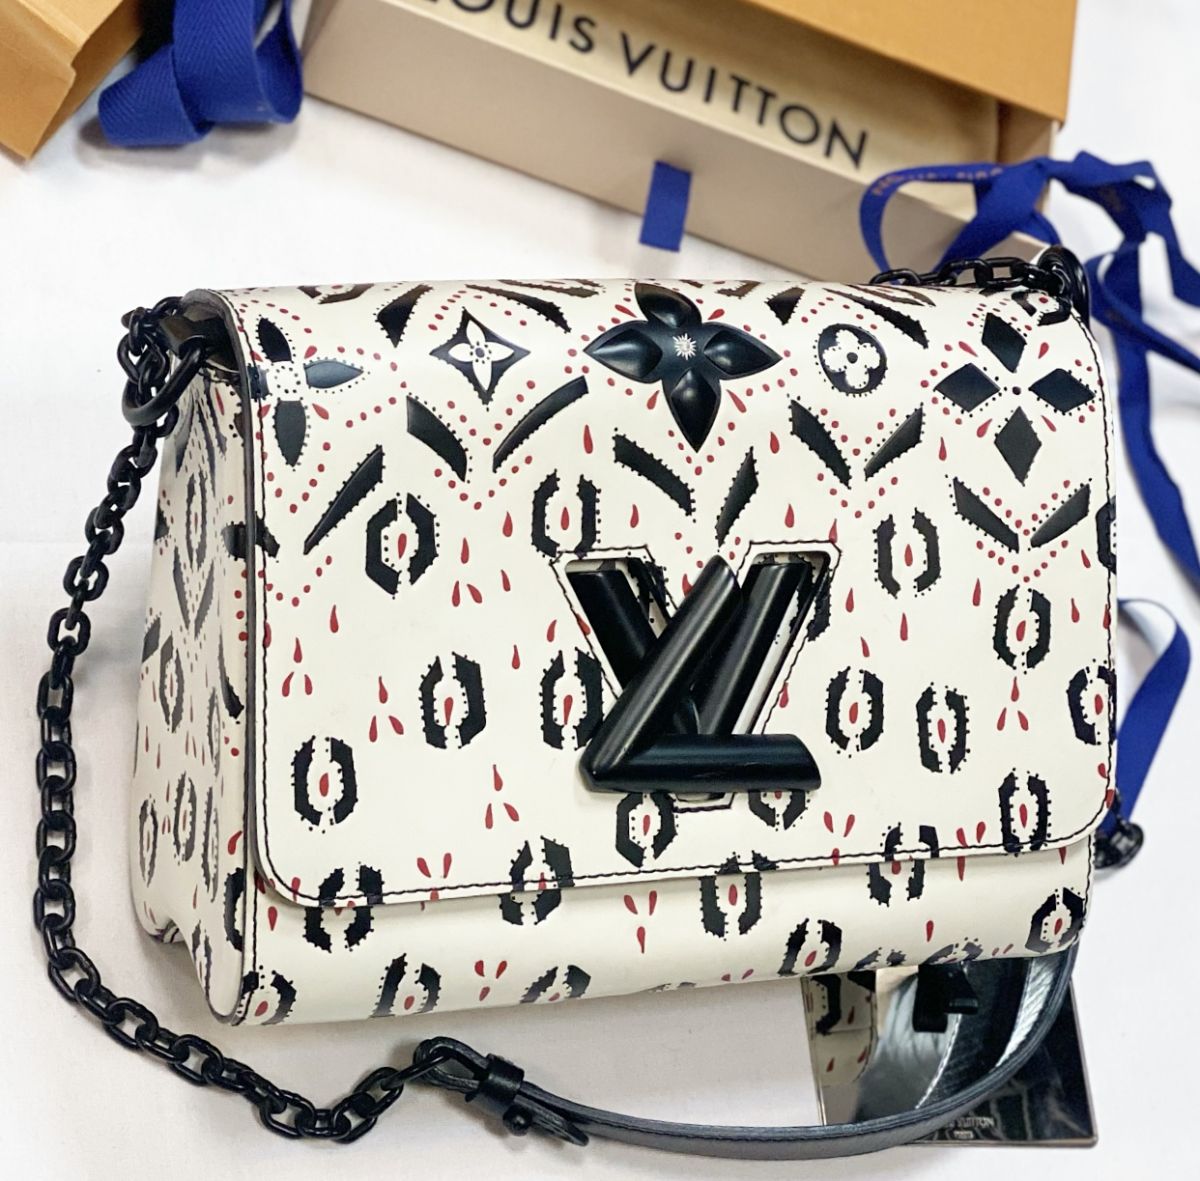 Сумка Louis Vuitton размер 23/16 цена 138 463 руб